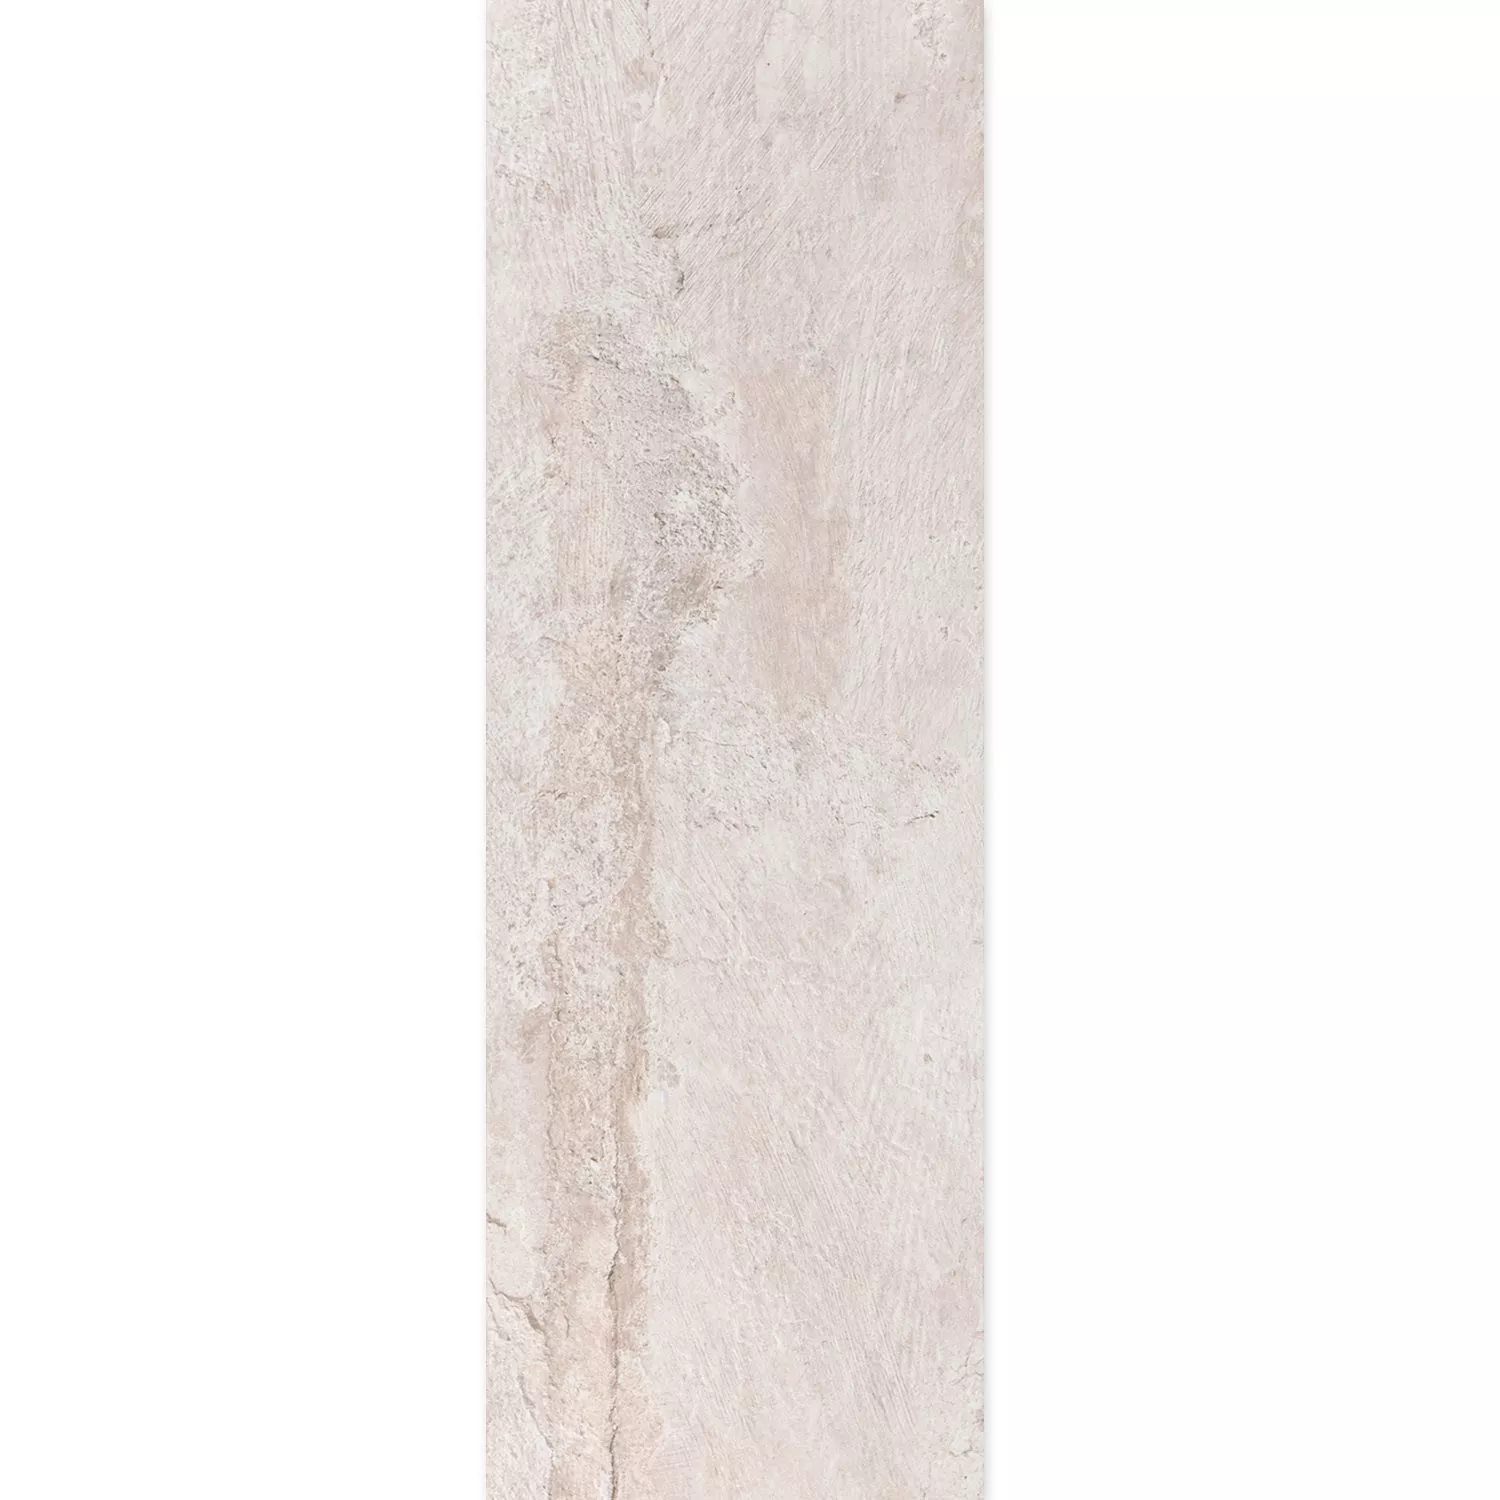 Vzorek Podlahová Dlaždice Kámen Vzhled Polaris R10 Bílá 30x120cm